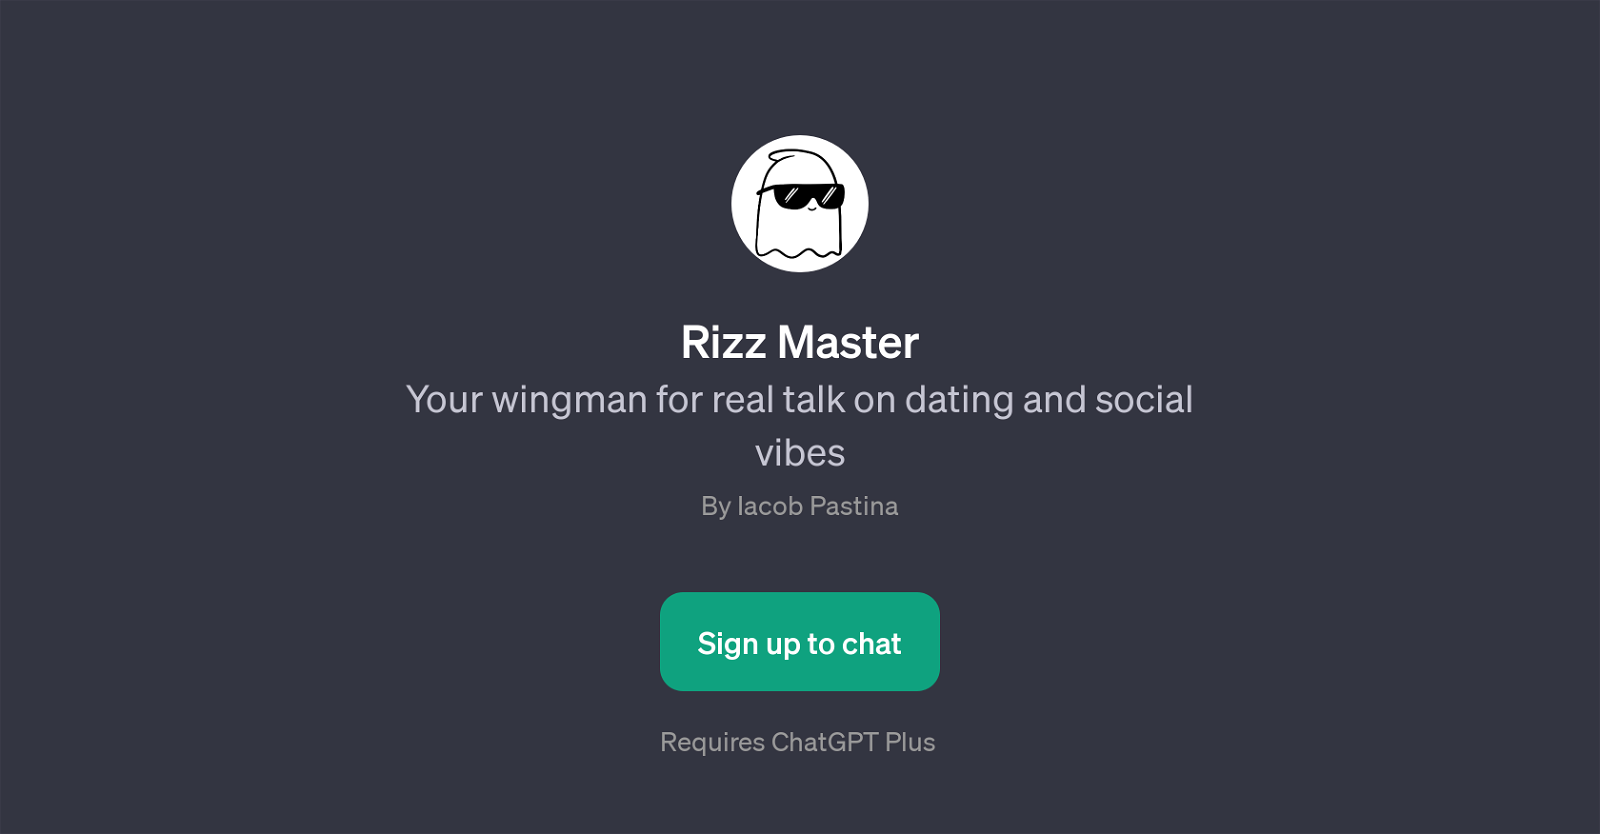 Rizz Master website